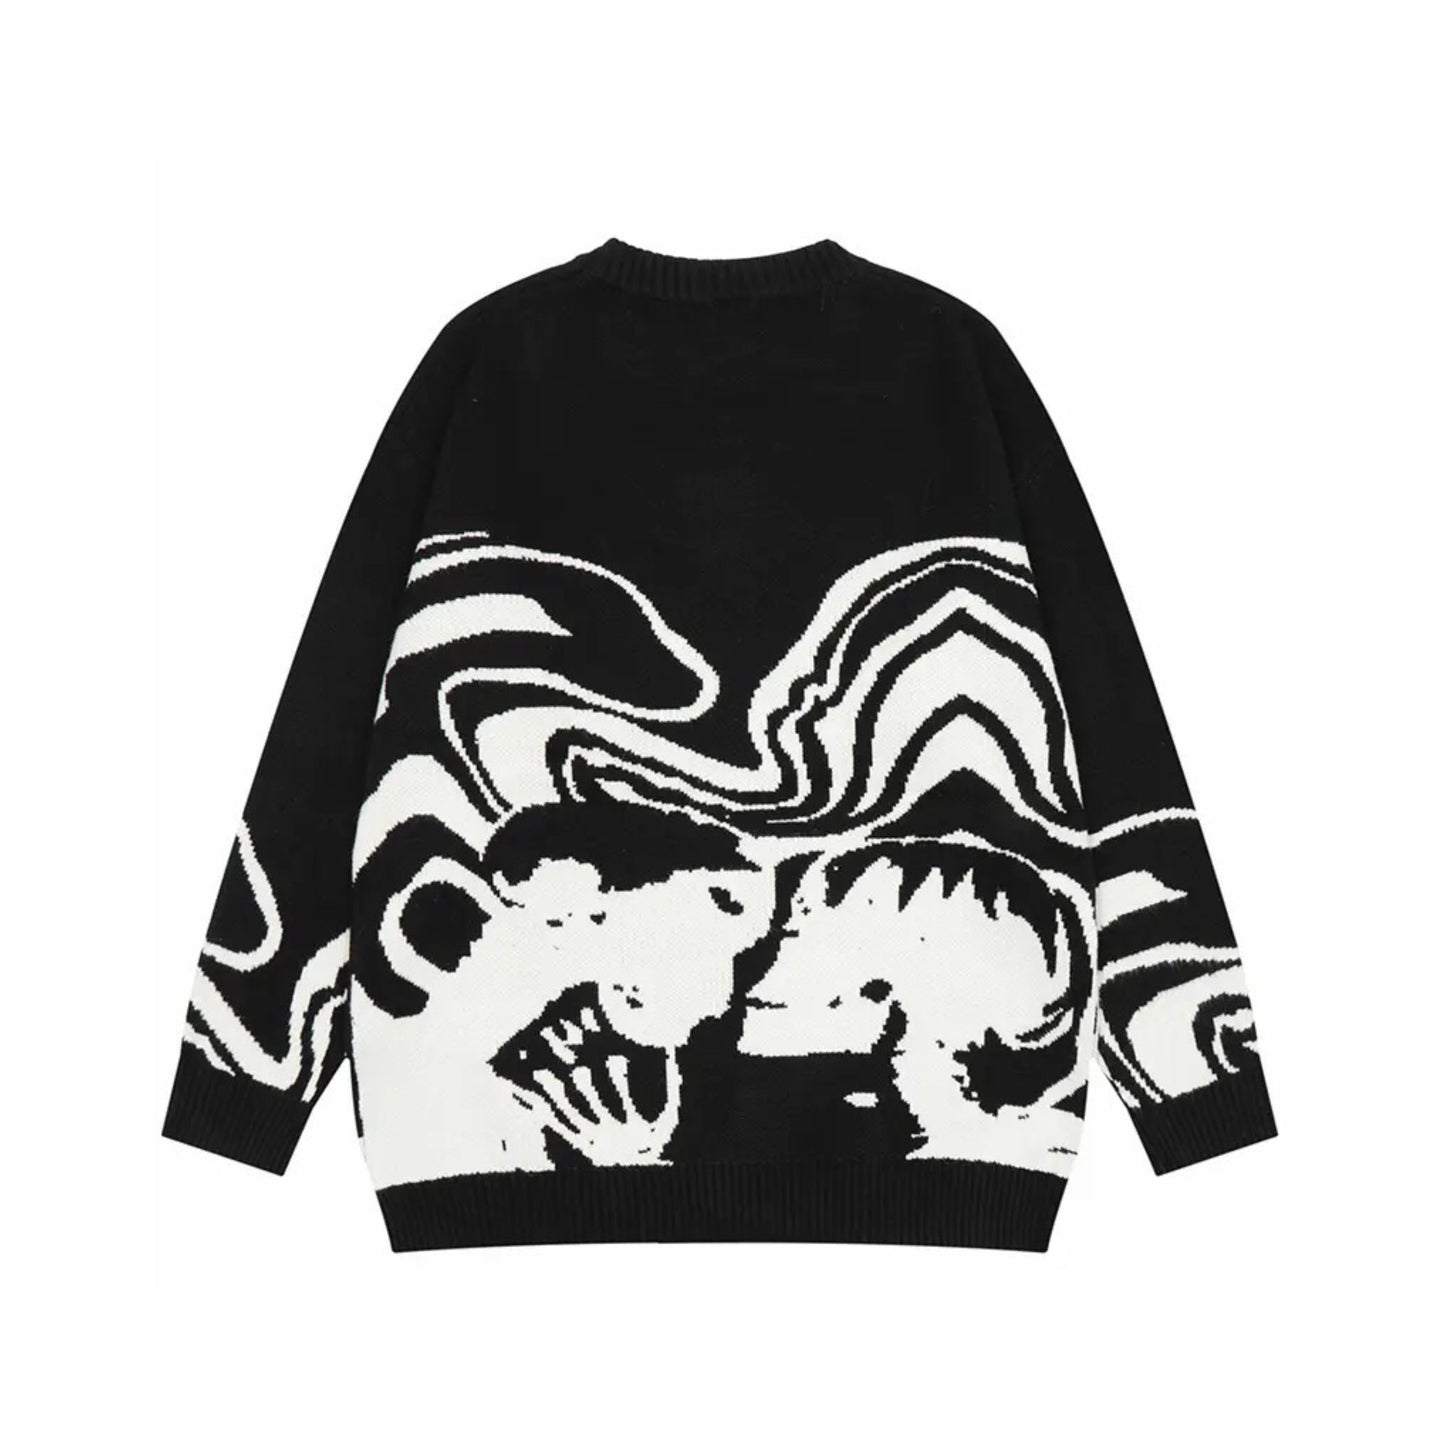 Monochrome Love Sweater